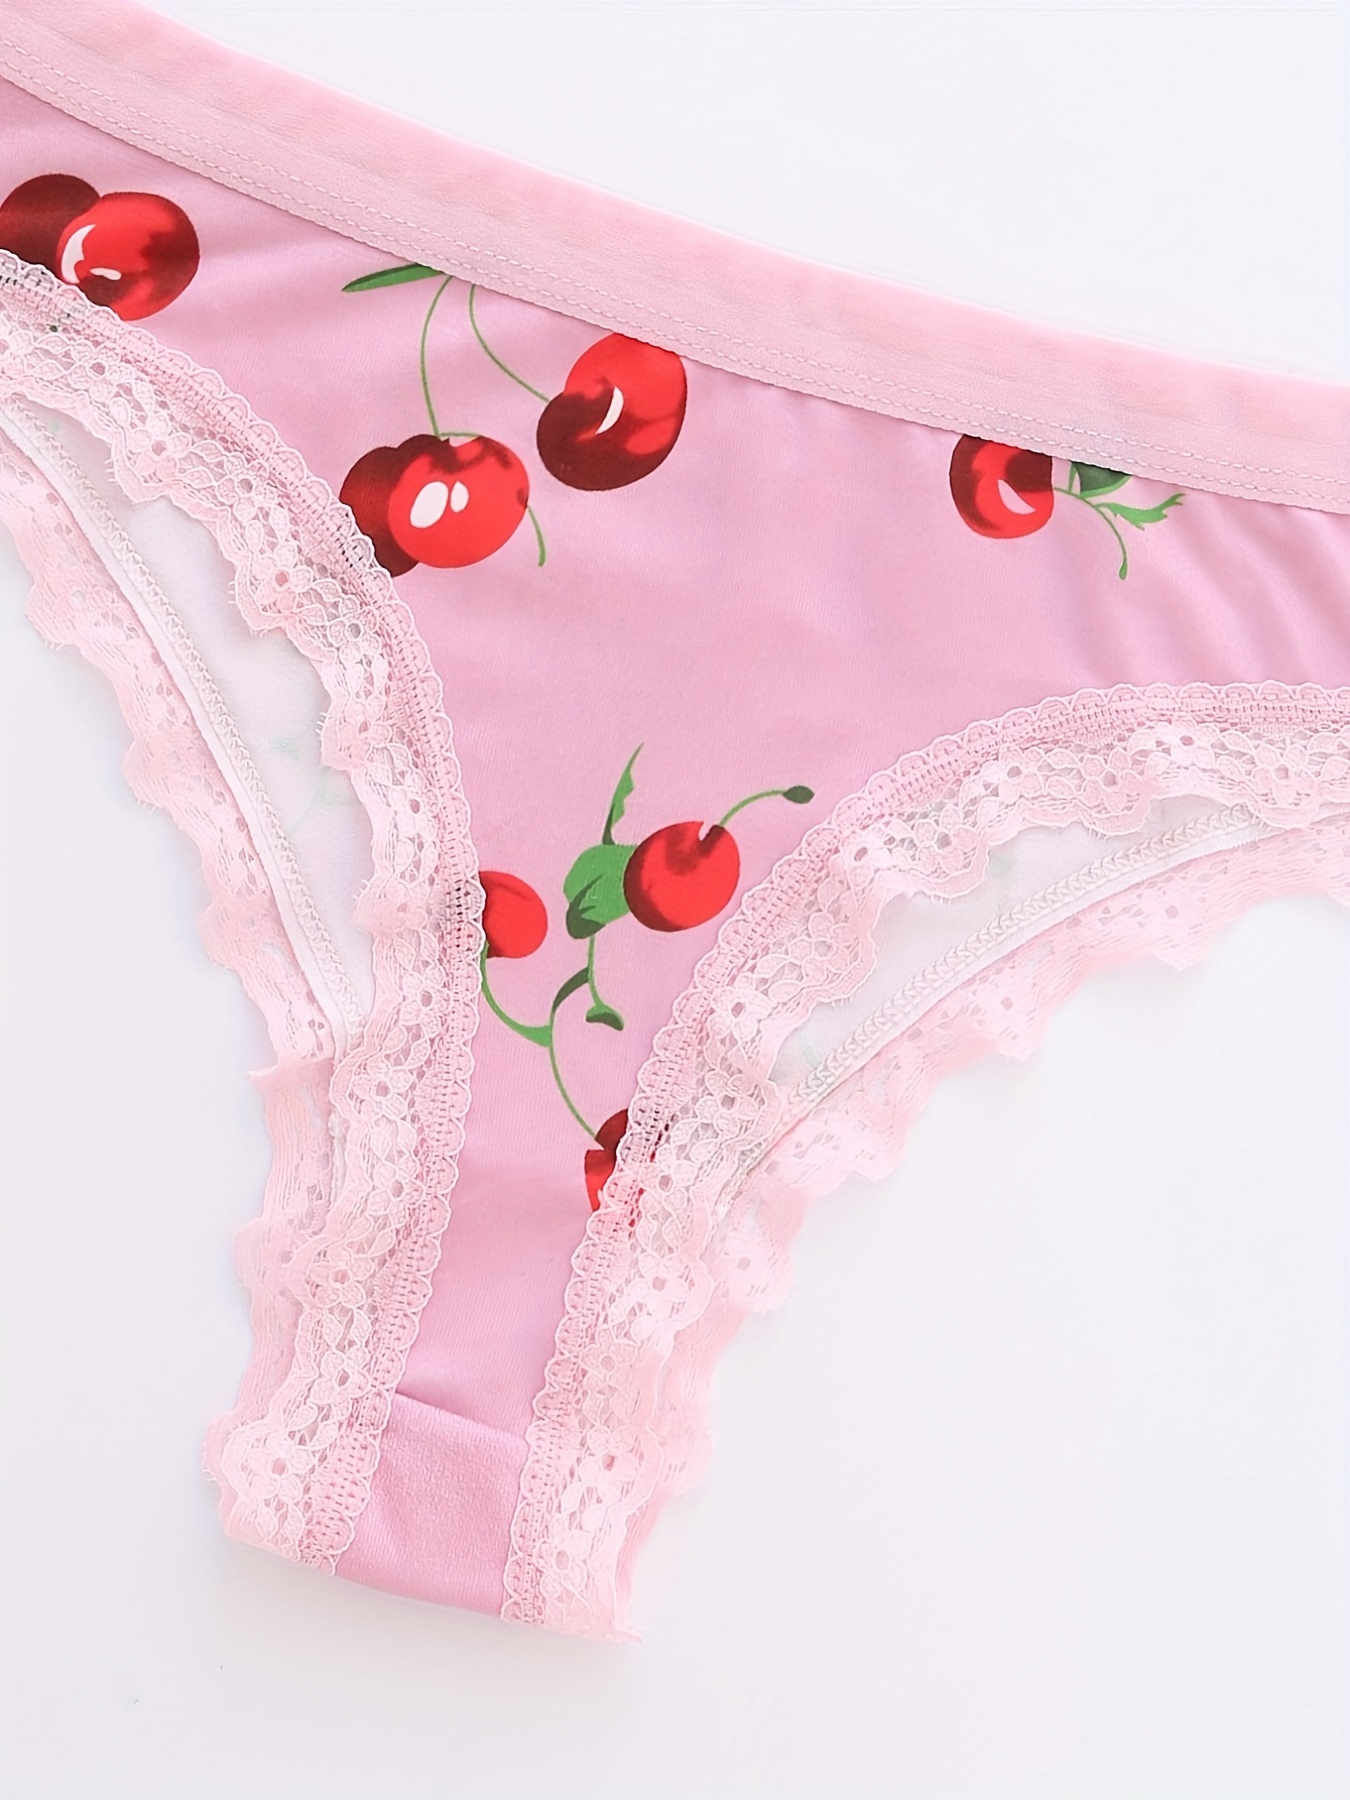 Cherry Strawberry Raspberry Women's Thongs Sexy T Back G-Strings